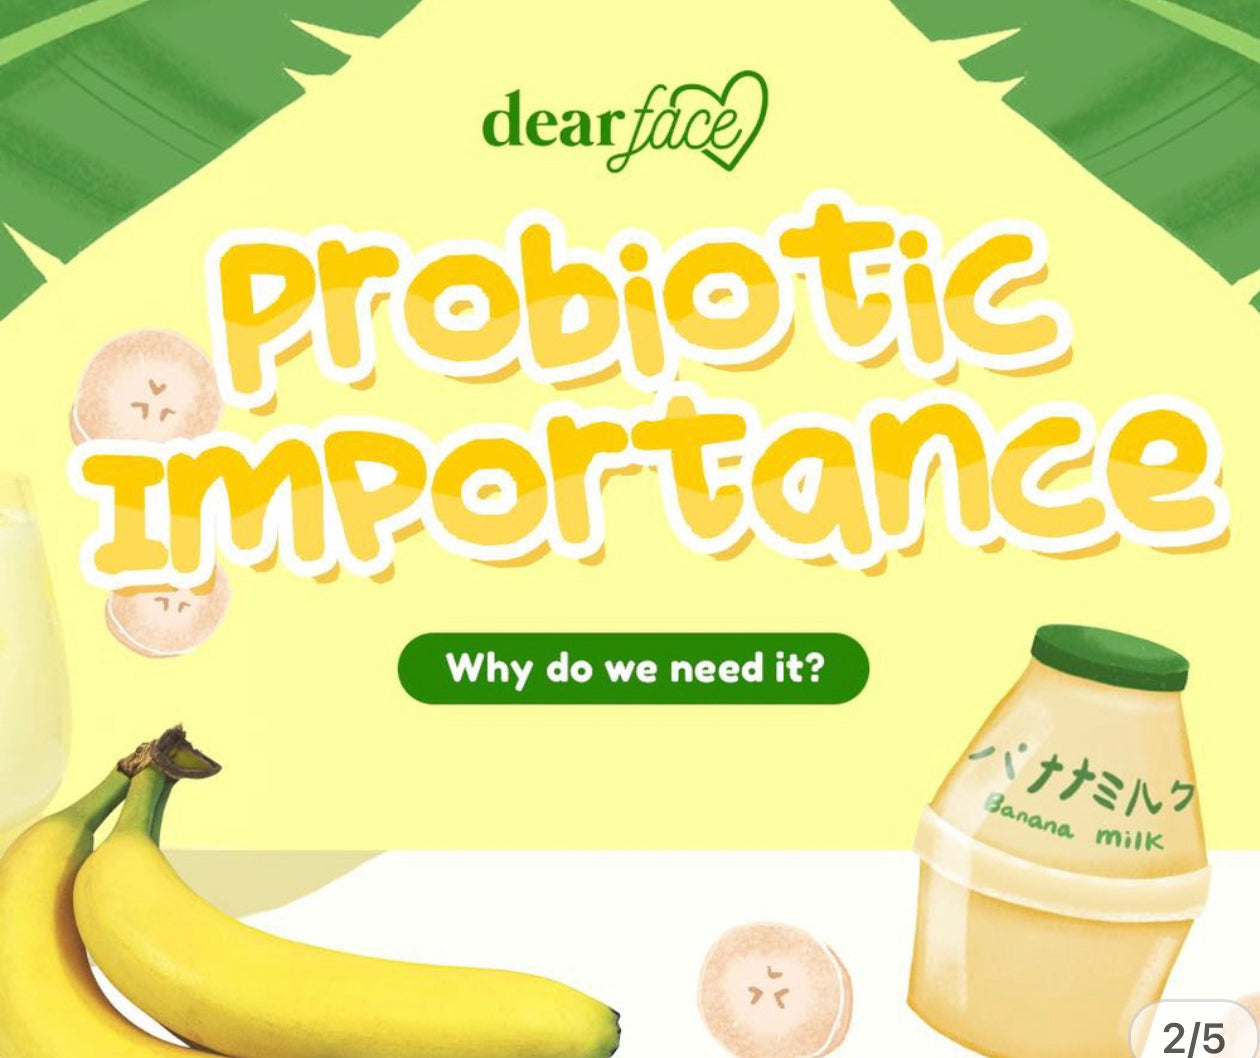 Dear Face Beauty Milk Premium Banana Milk Probiotic